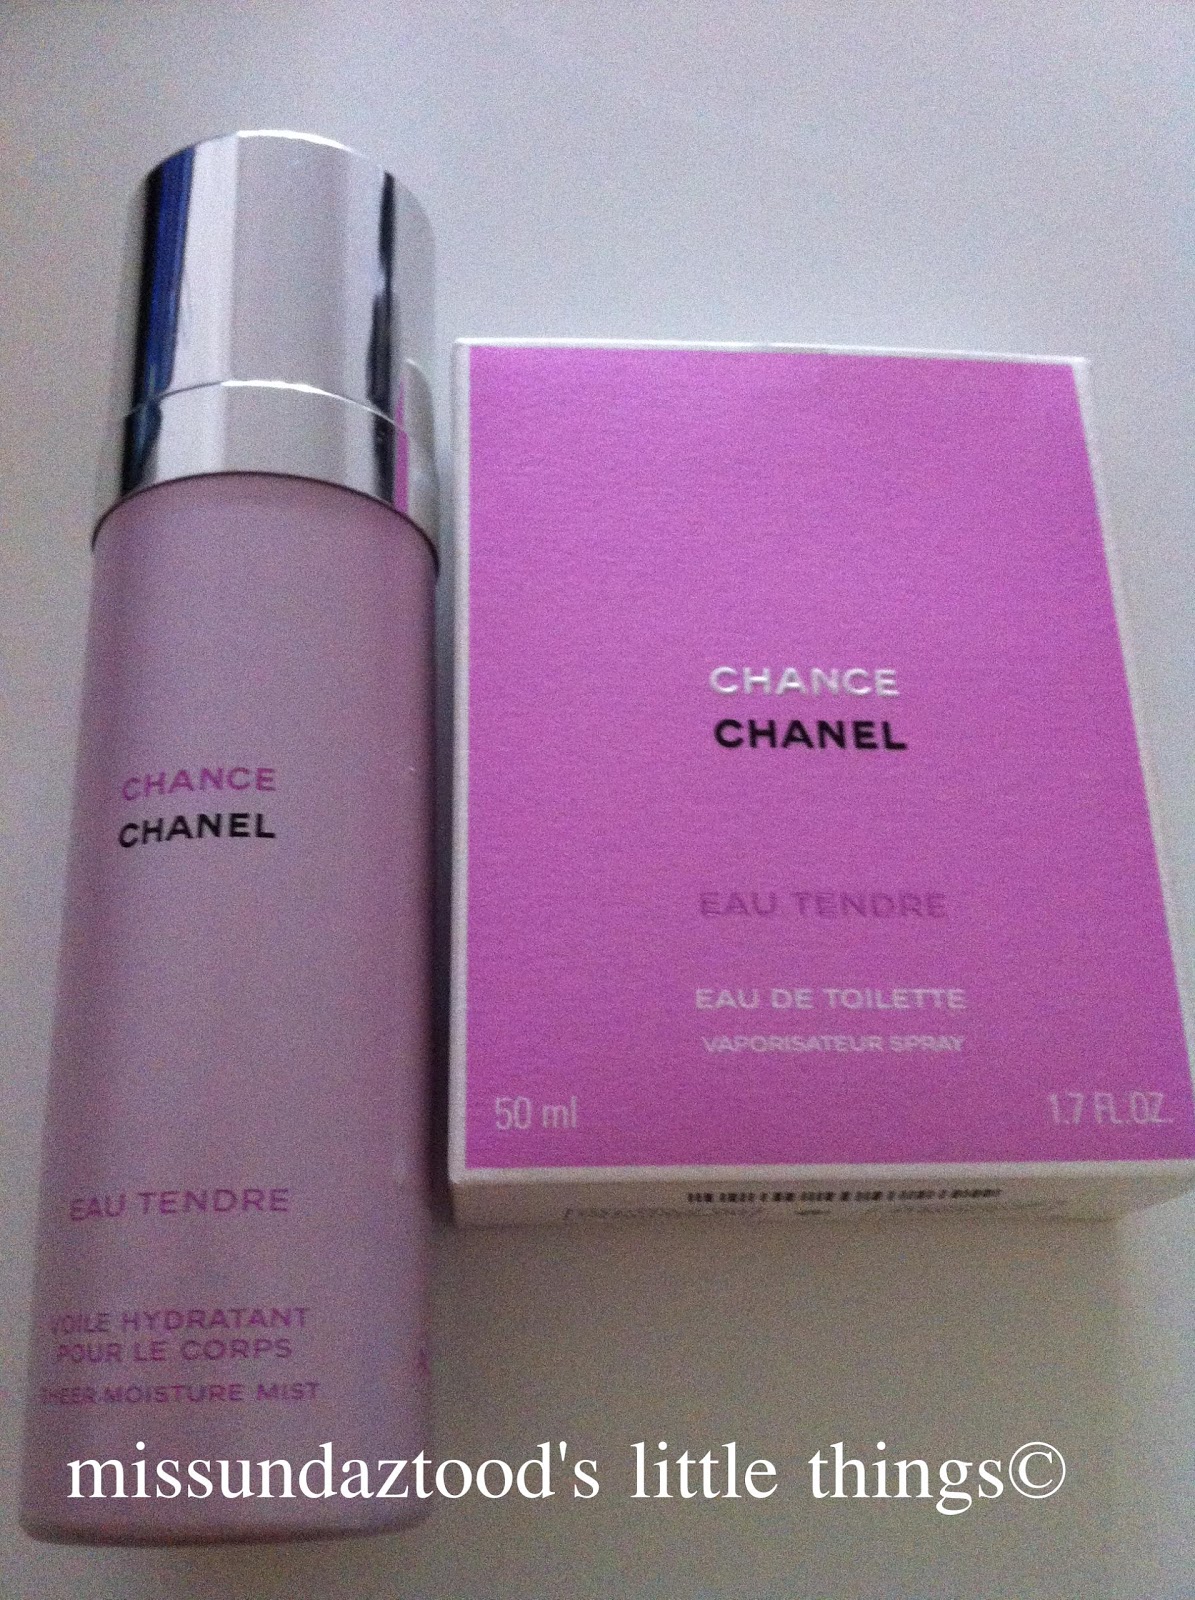 Chance Eau de Toilette Chanel parfum - een geur voor dames 2002